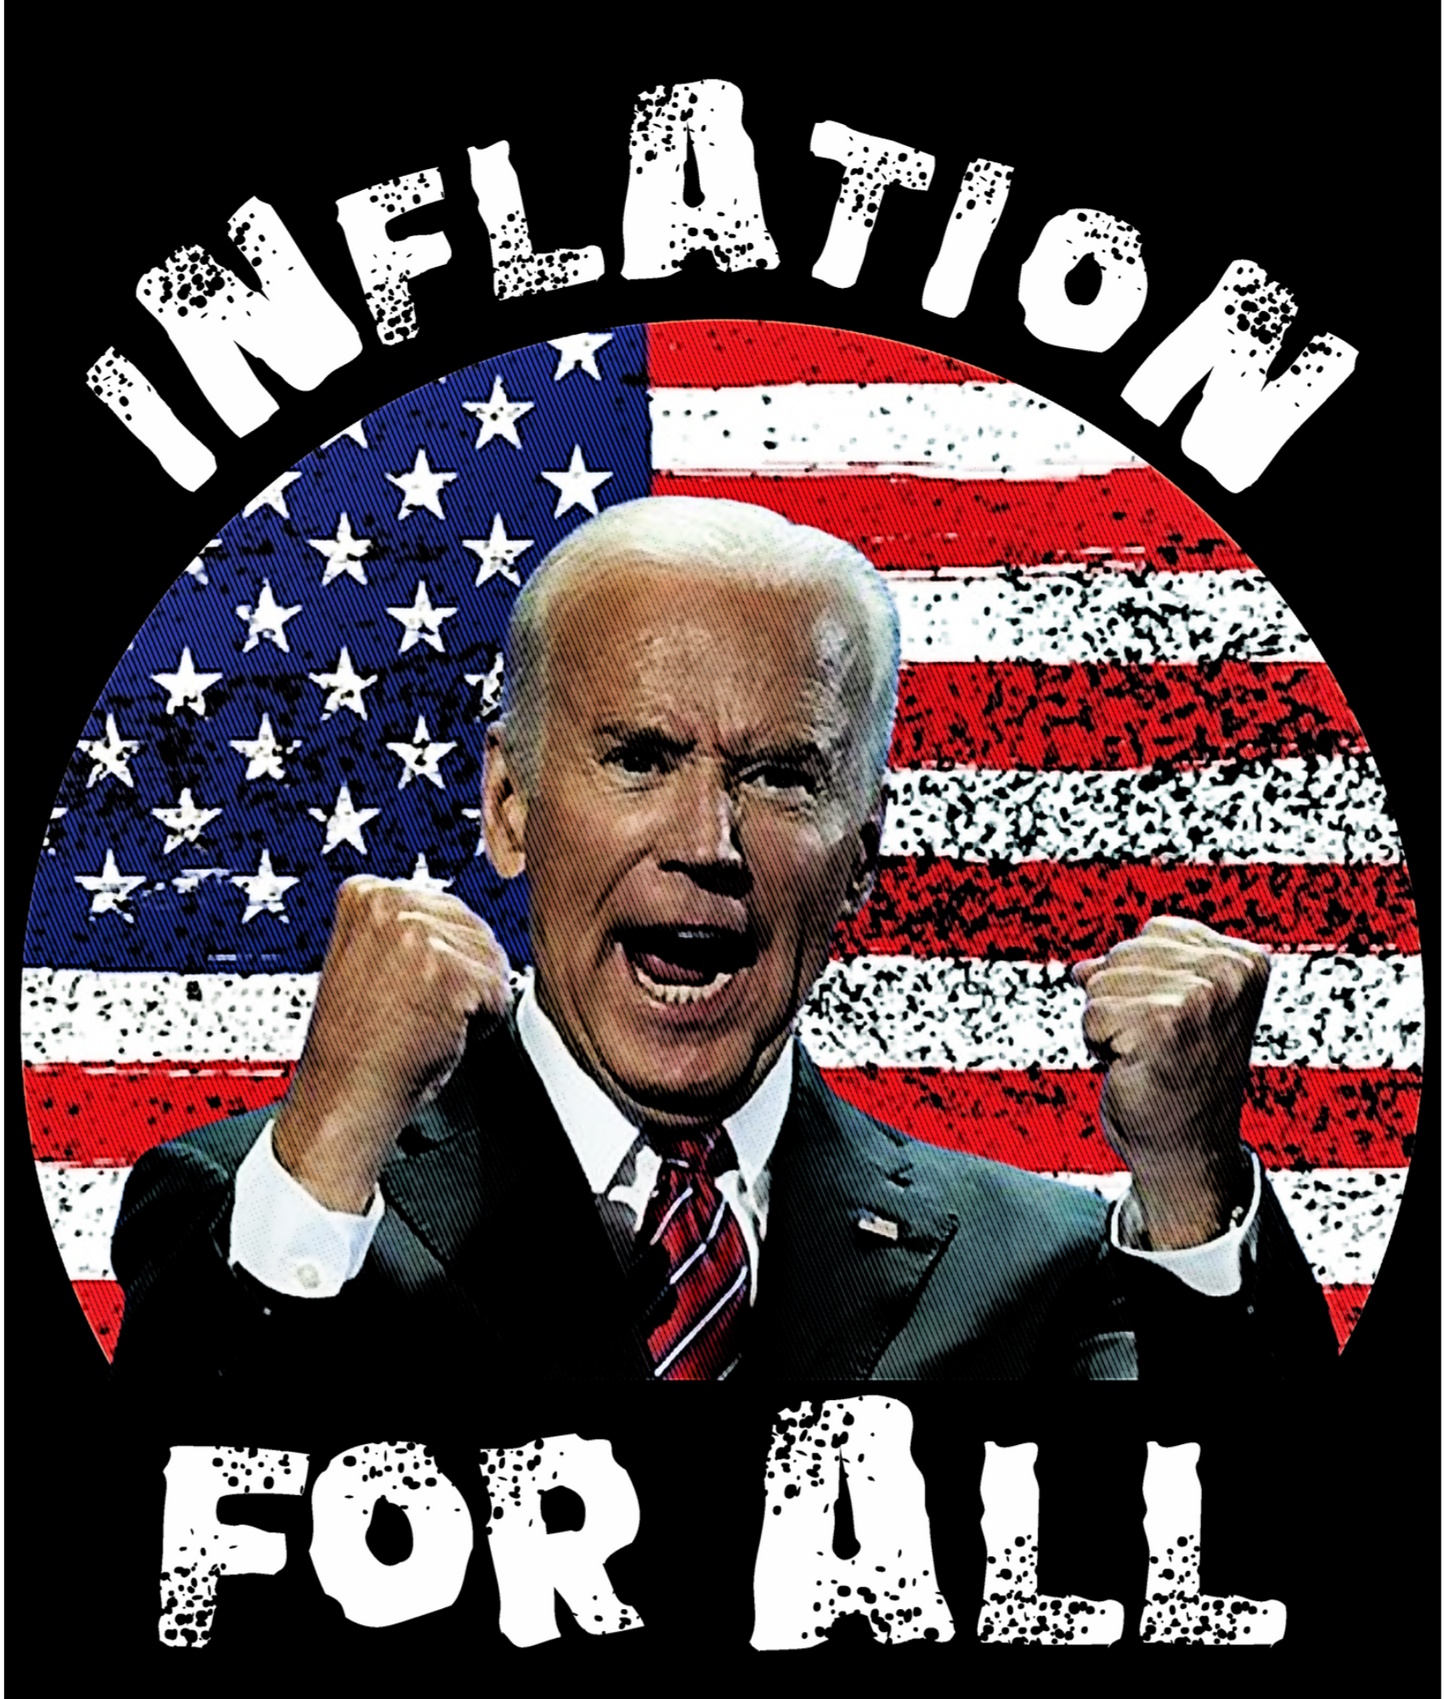 Joe Biden Inflation for All Adult Humor T-shirt, USA President Funny Joke, Democrat T-shirt